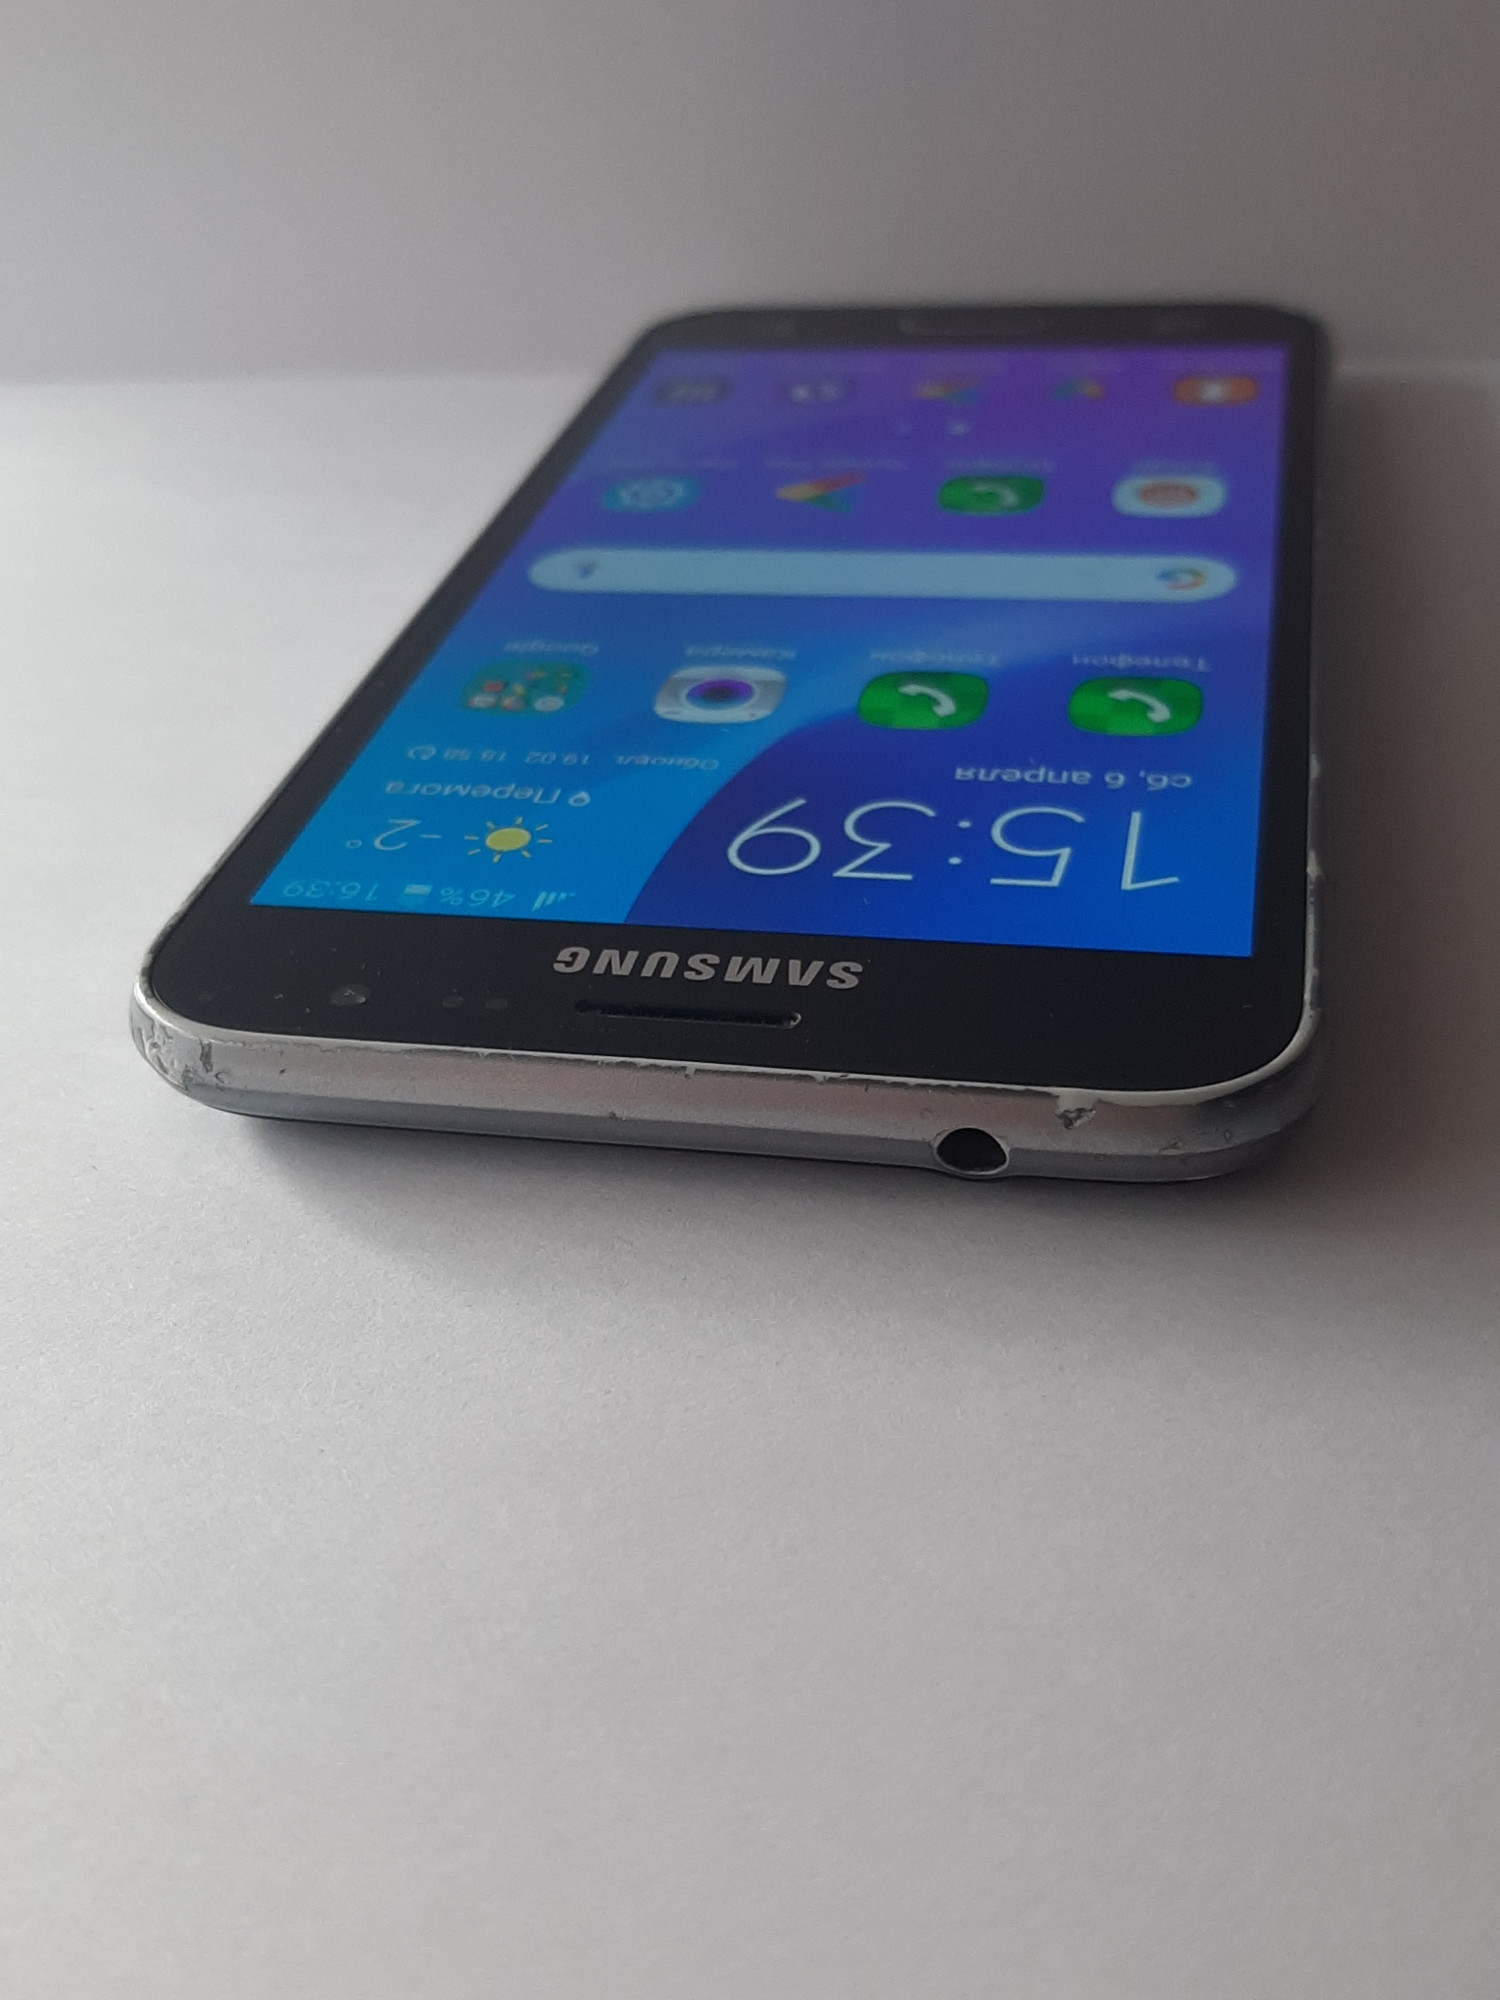 Samsung Galaxy J3 2016 Black (SM-J320HZKD) 1/8Gb 3